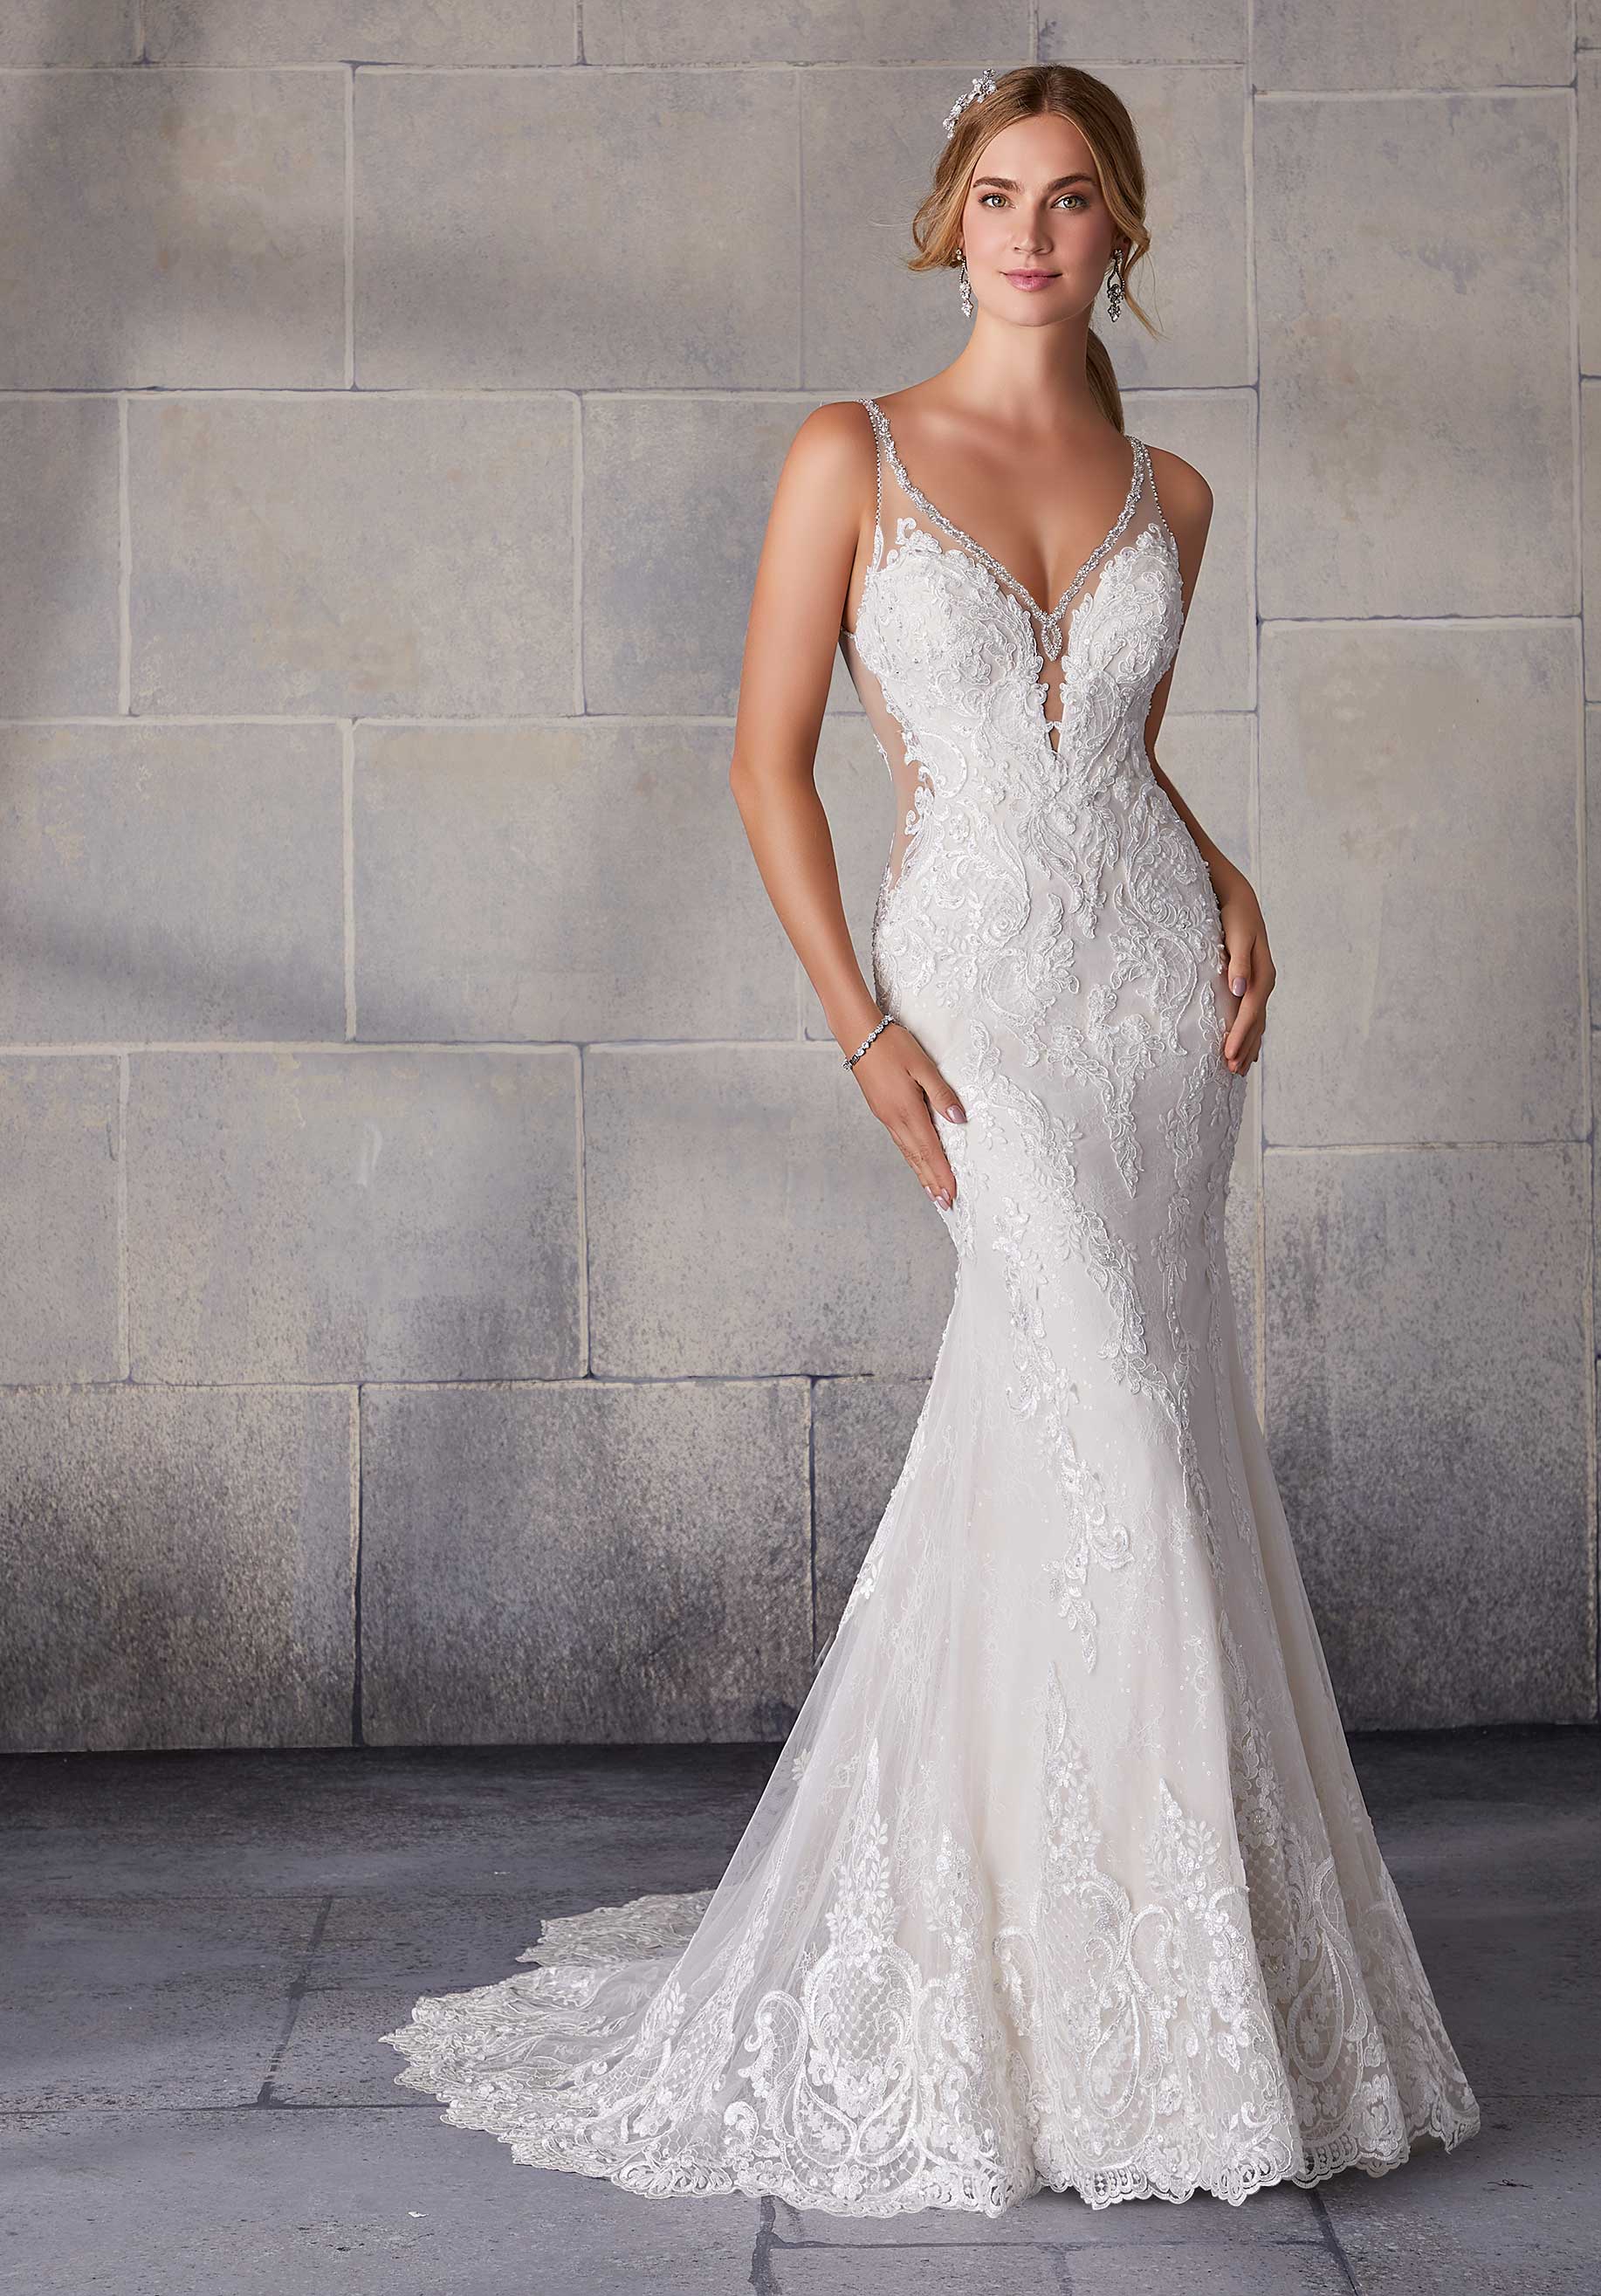 Wedding Dress - Mori Lee Bridal Spring 2020 Collection: 2139 - Sofia